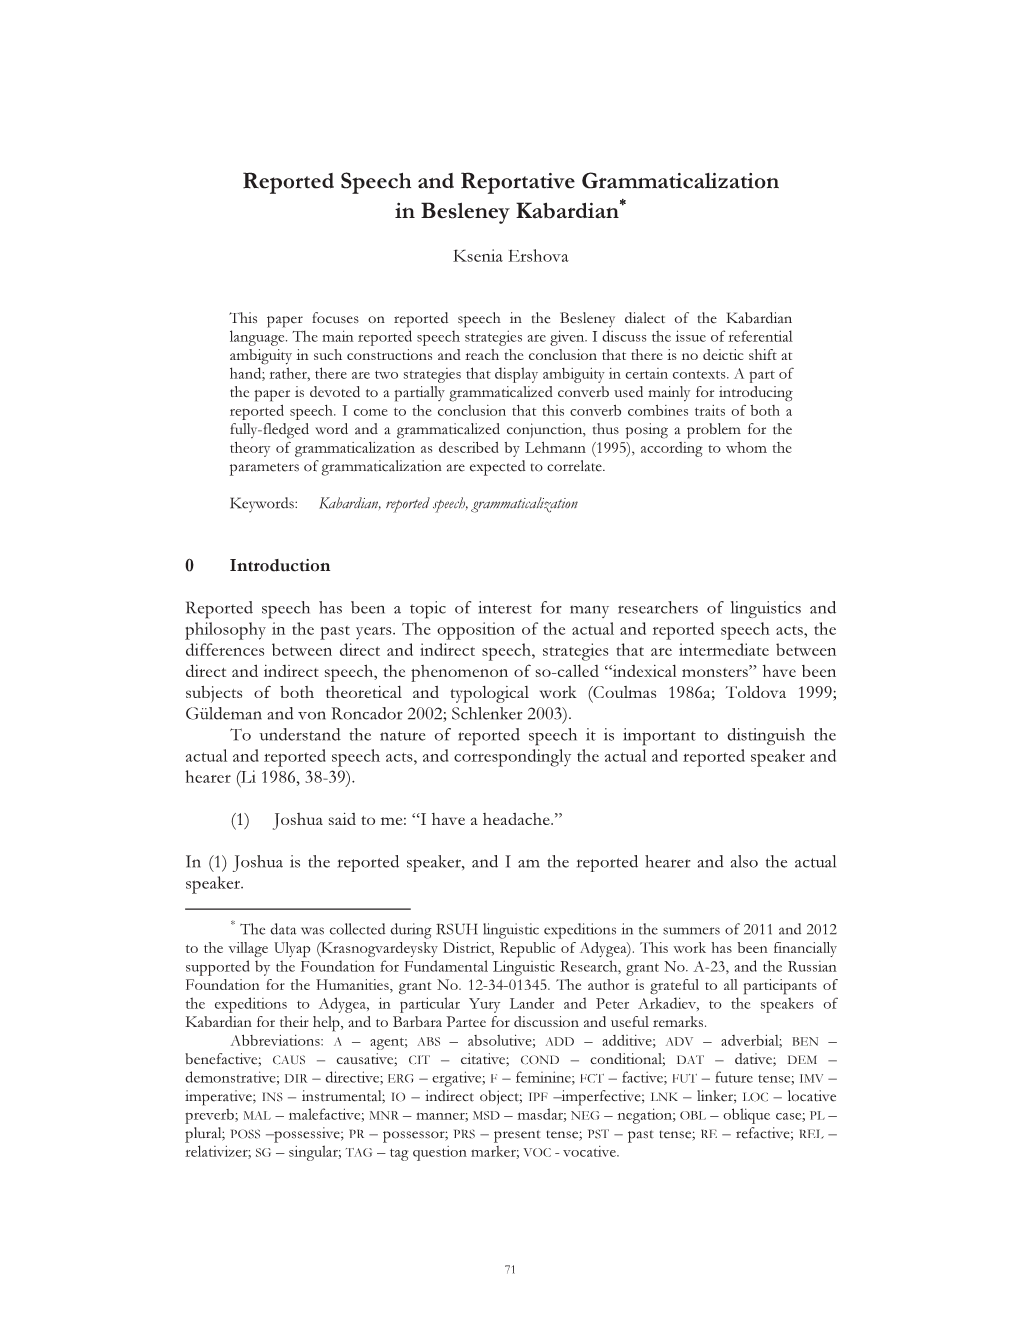 Reported Speech and Reportative Grammaticalization in Besleney